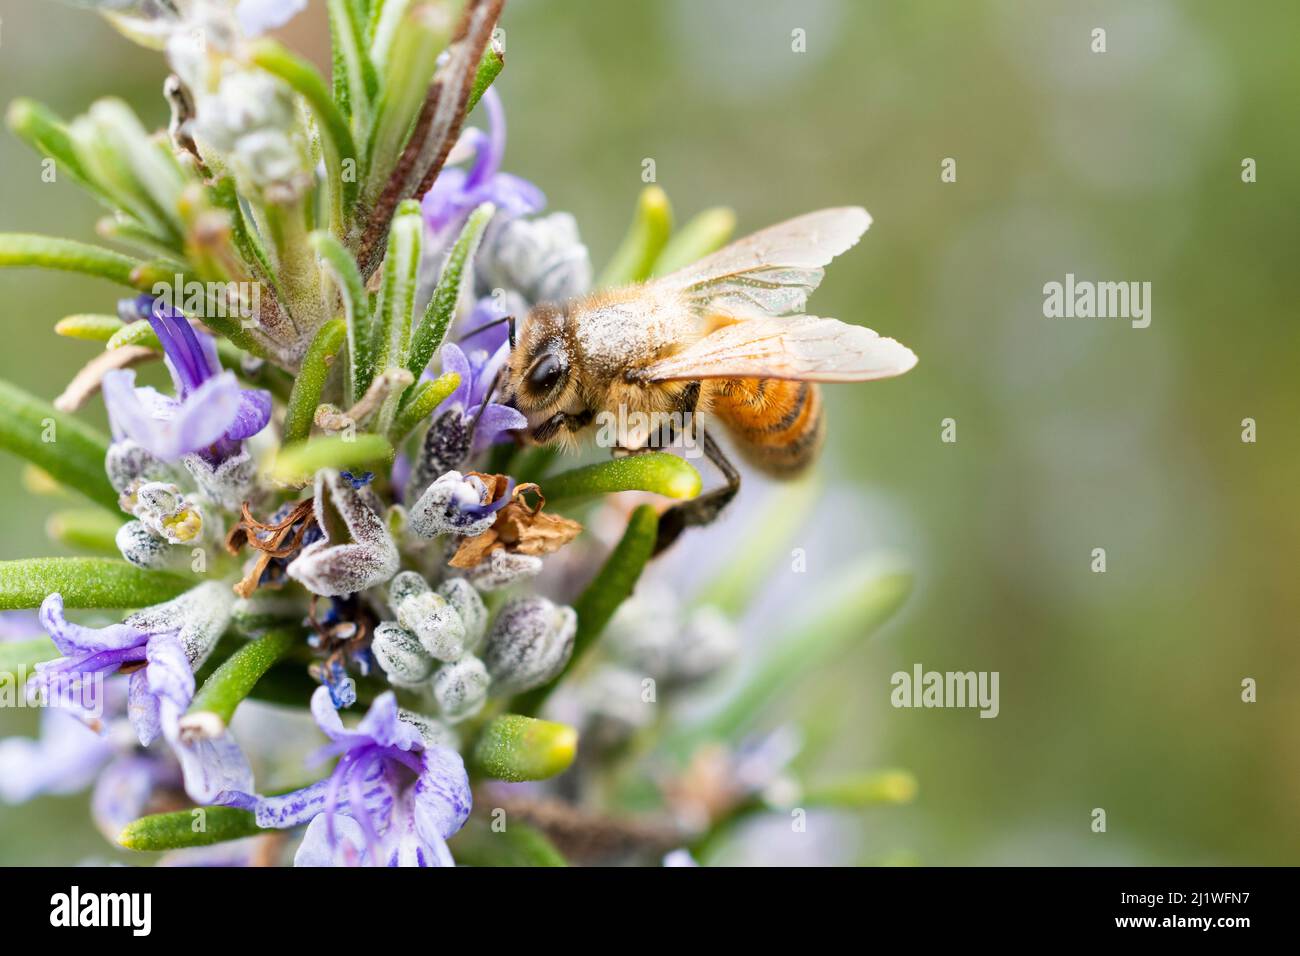 Honey bee pollinates flowers on rosemary plant Stock Photo